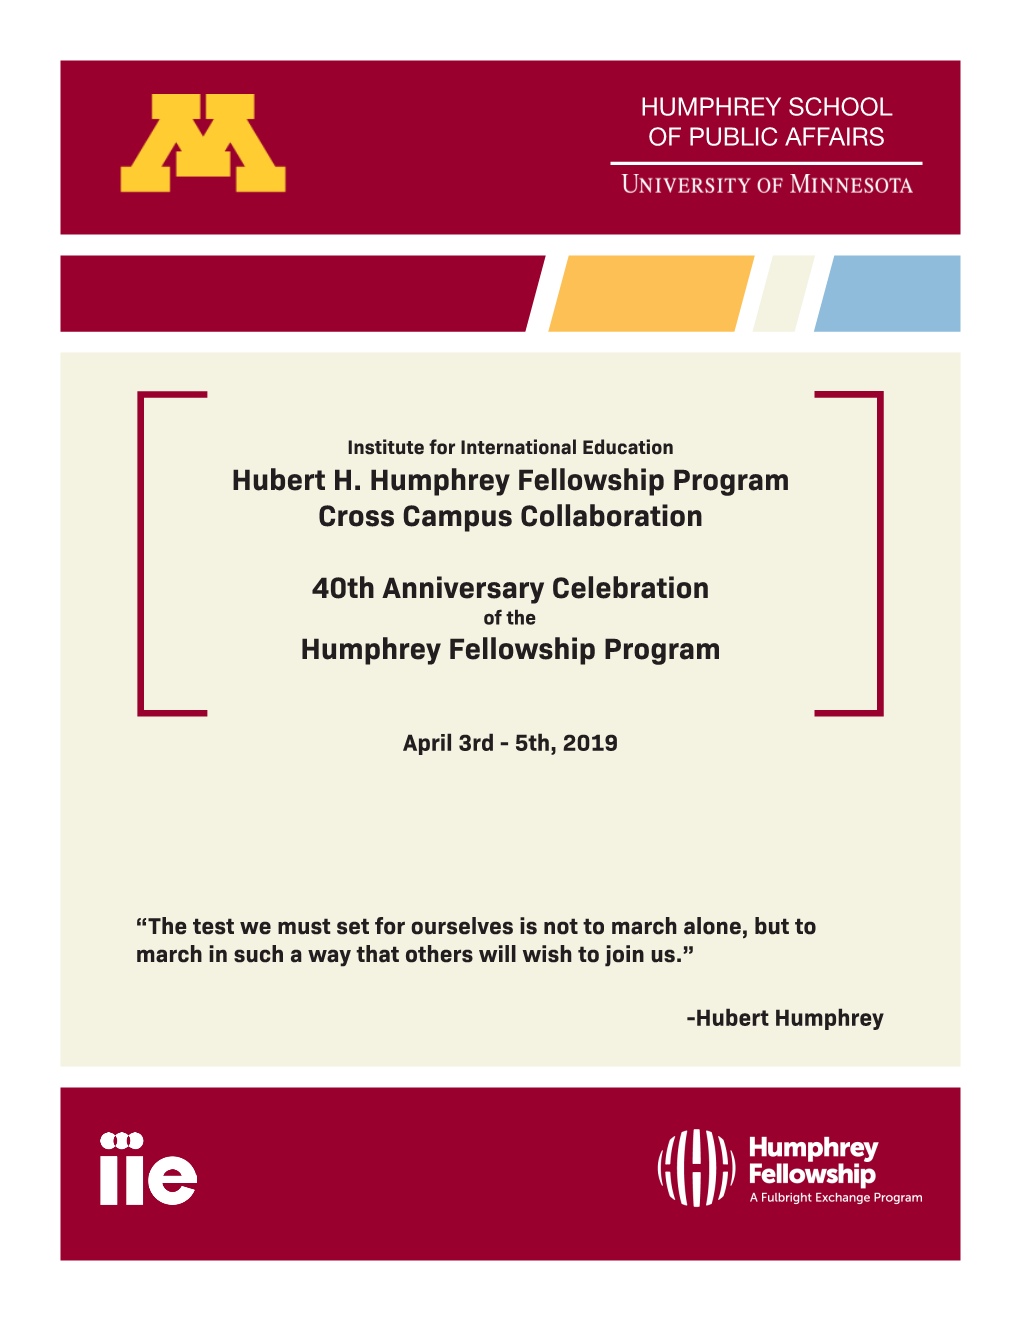 Hubert H. Humphrey Fellowship Program Cross Campus Collaboration